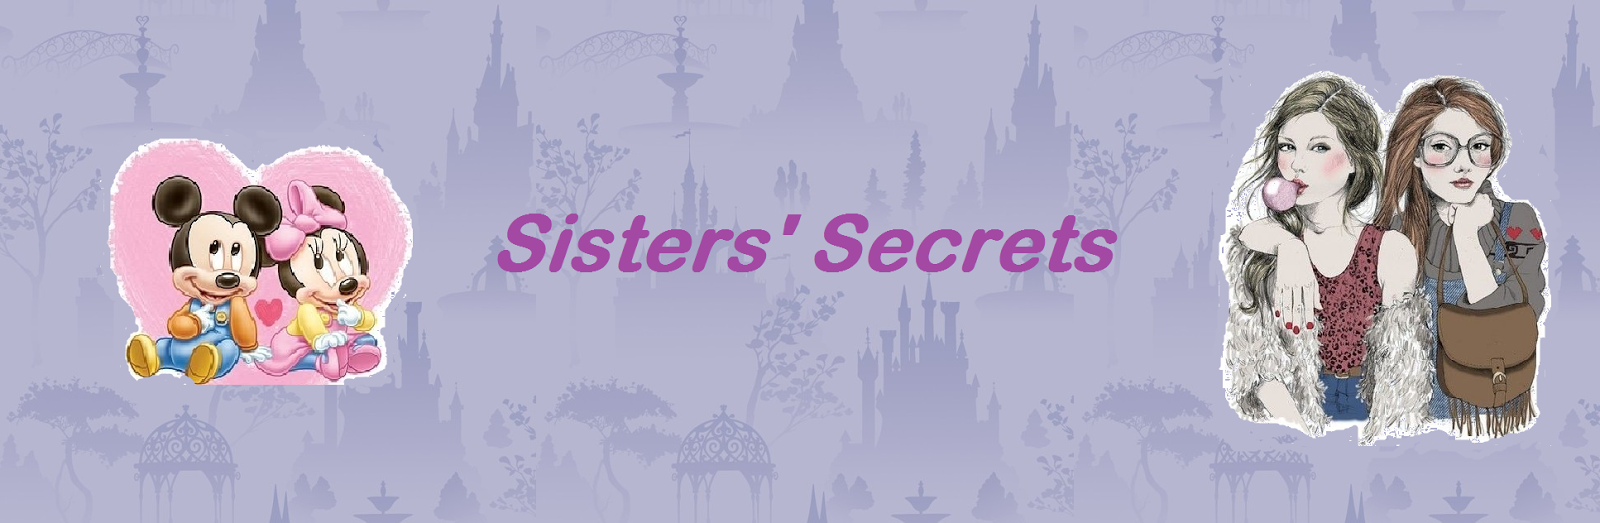 Sisters' Secrets